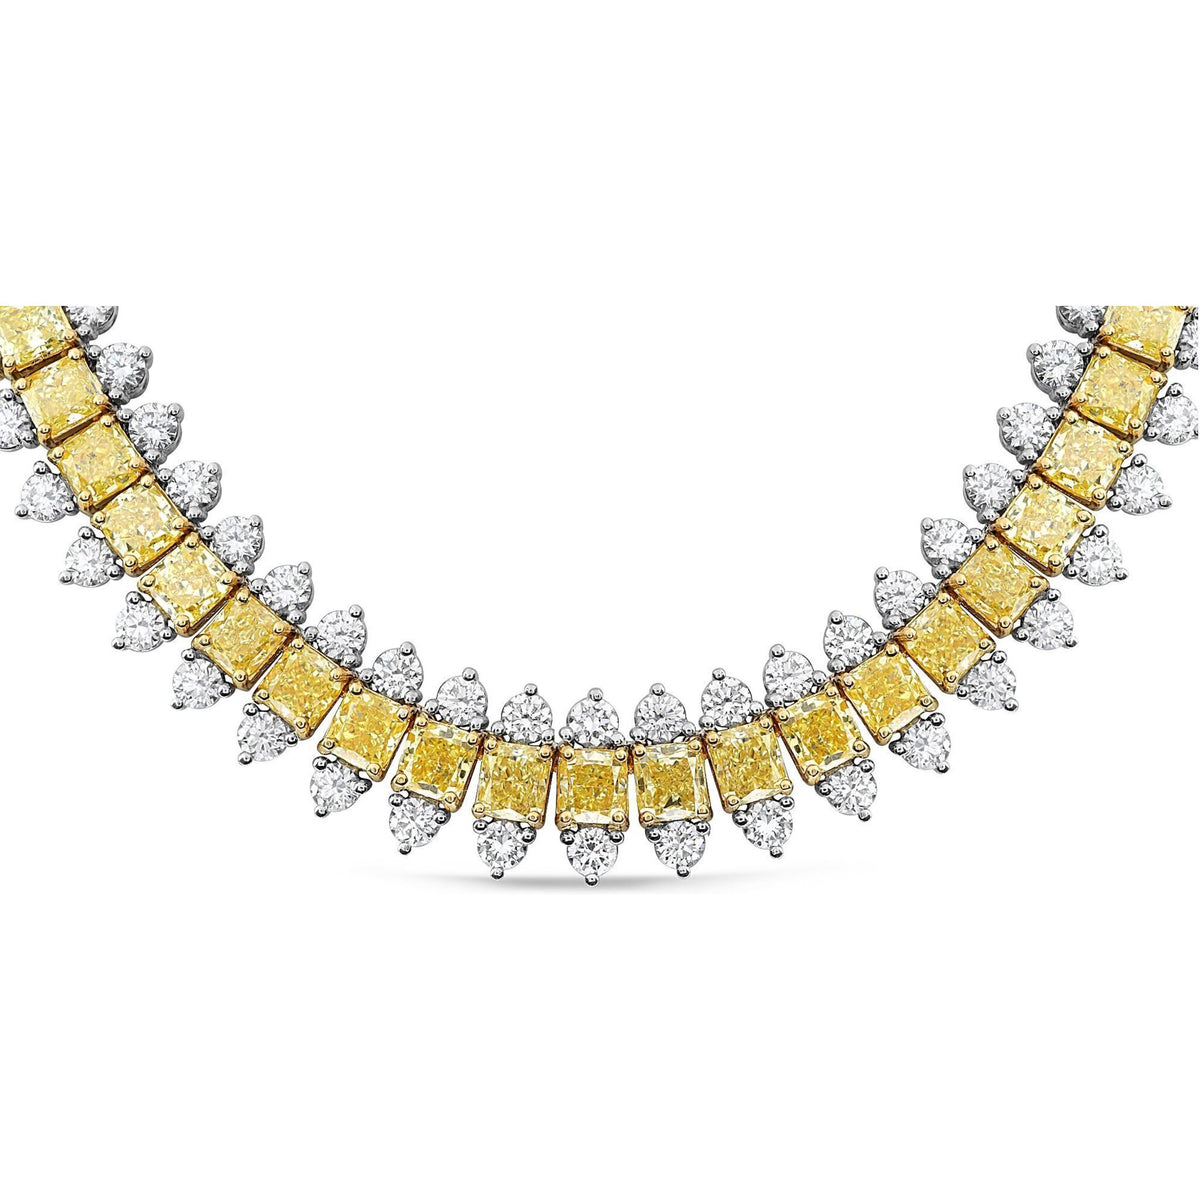 Roman & Jules 18K Yellow Gold Radiant Diamond Necklace - 34.97 Carat Total Diamond Weight